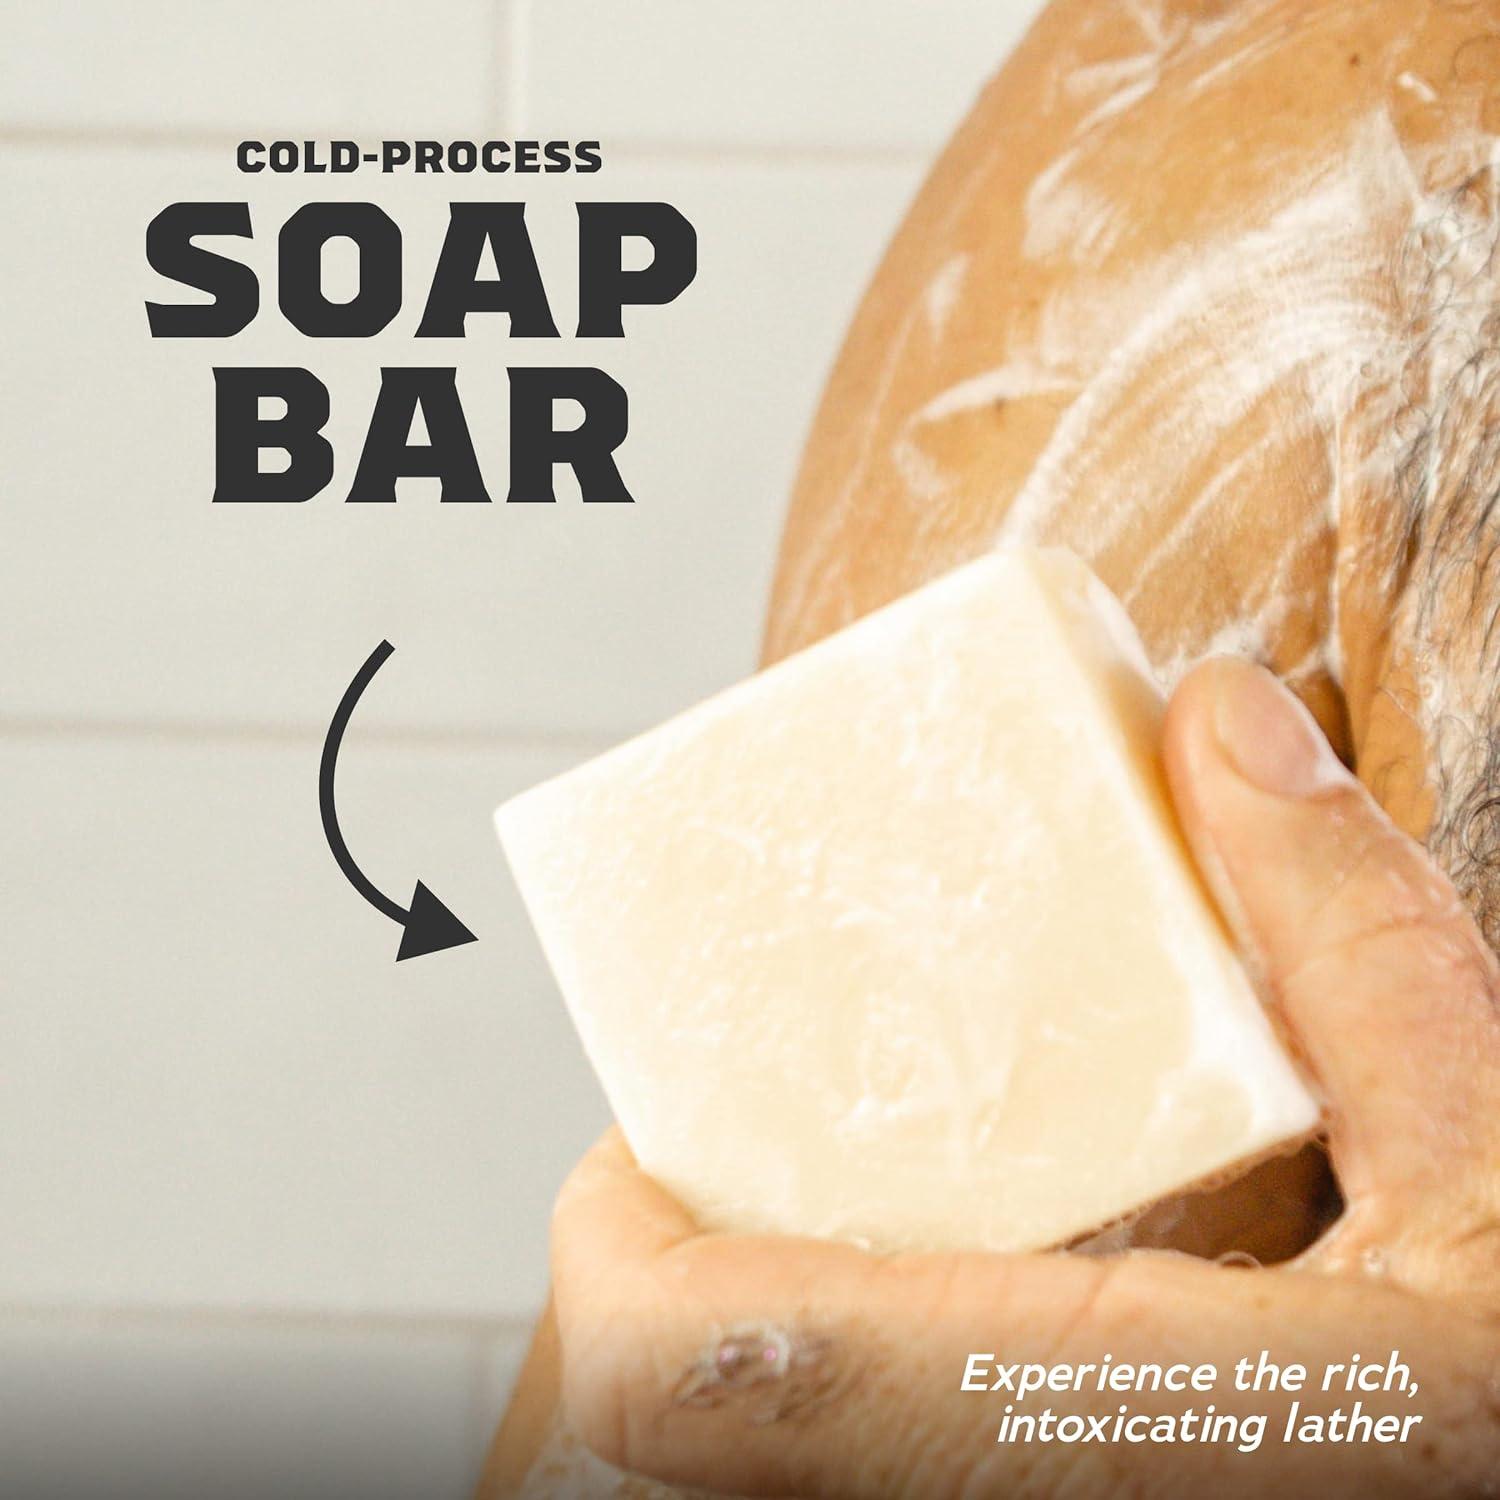 Gold Moss Bar Soap For Men, Dr. Squatch